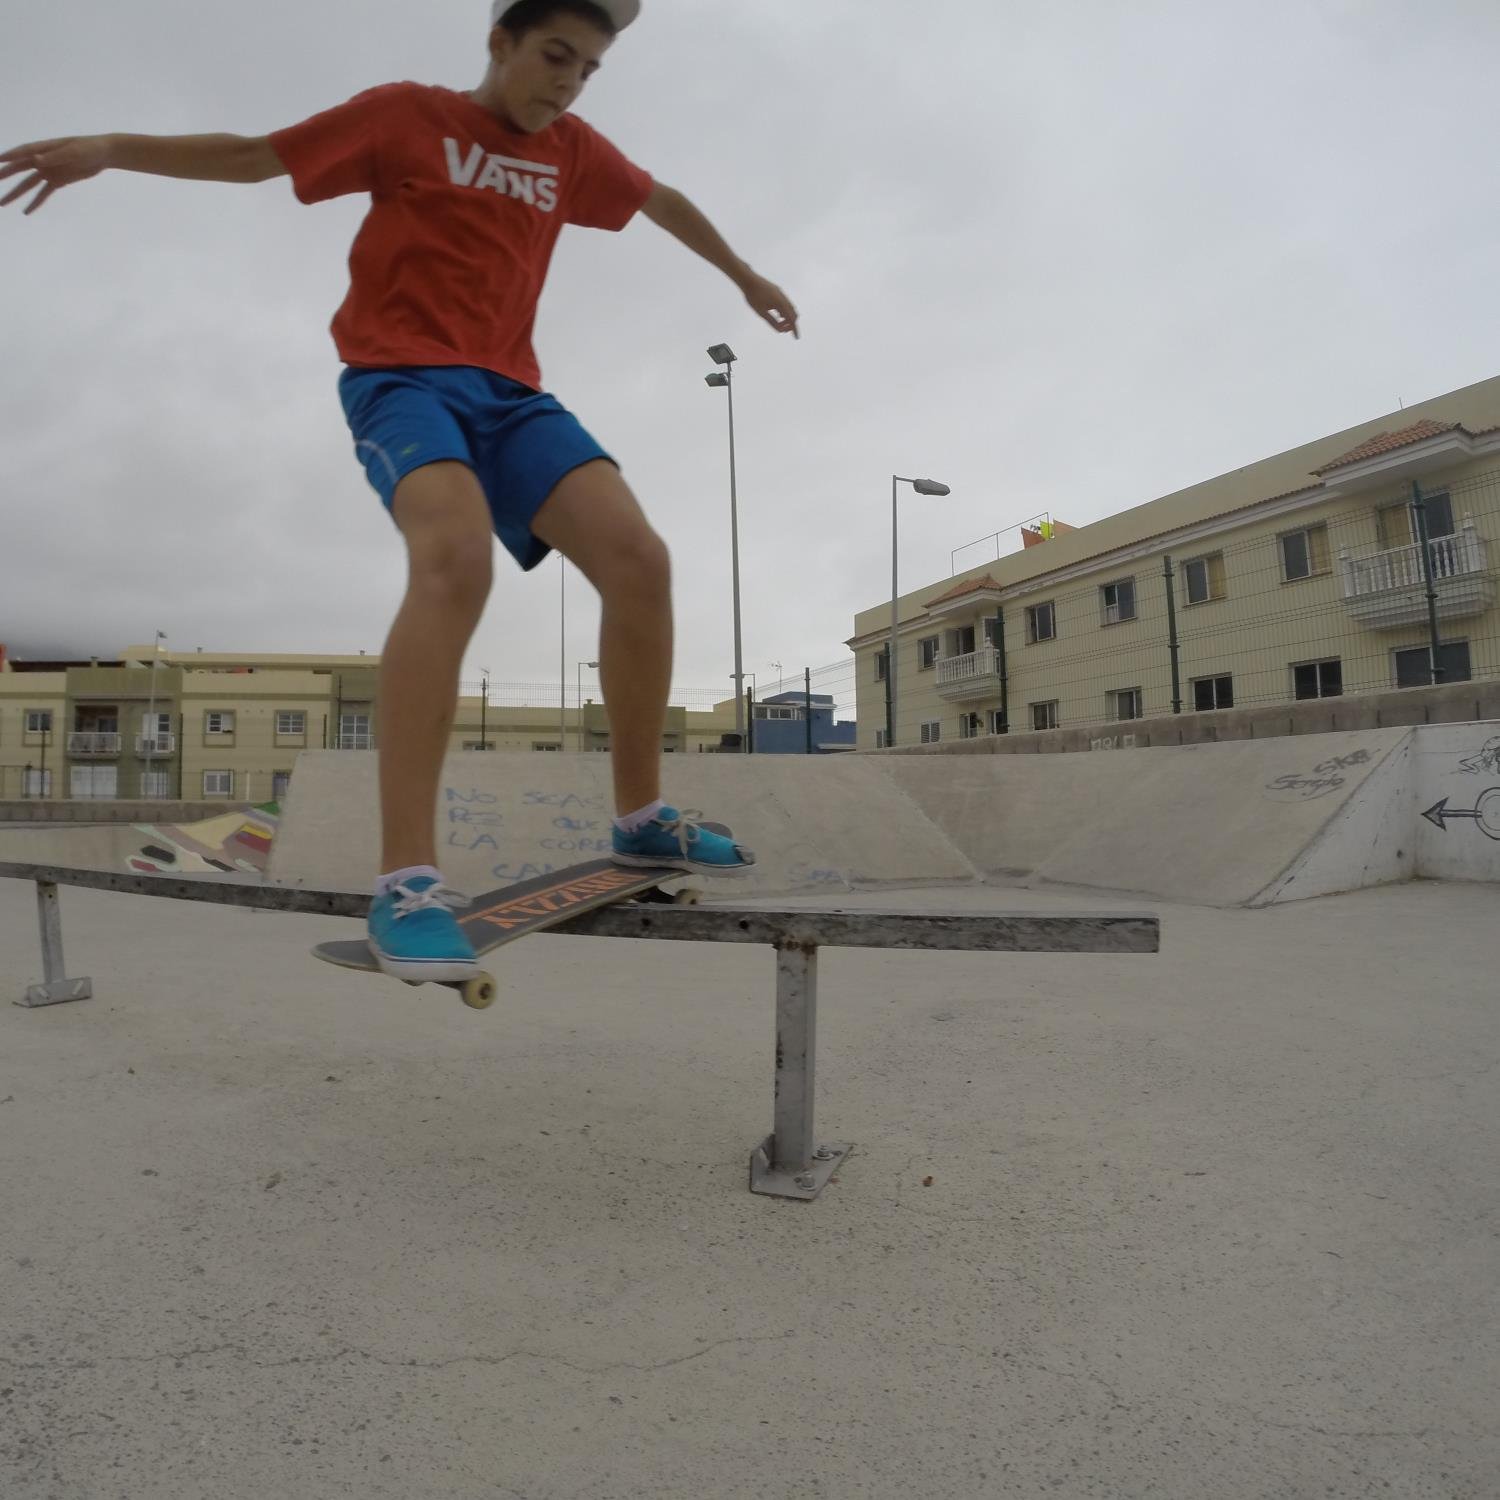 Skateboarding and Canary Islands